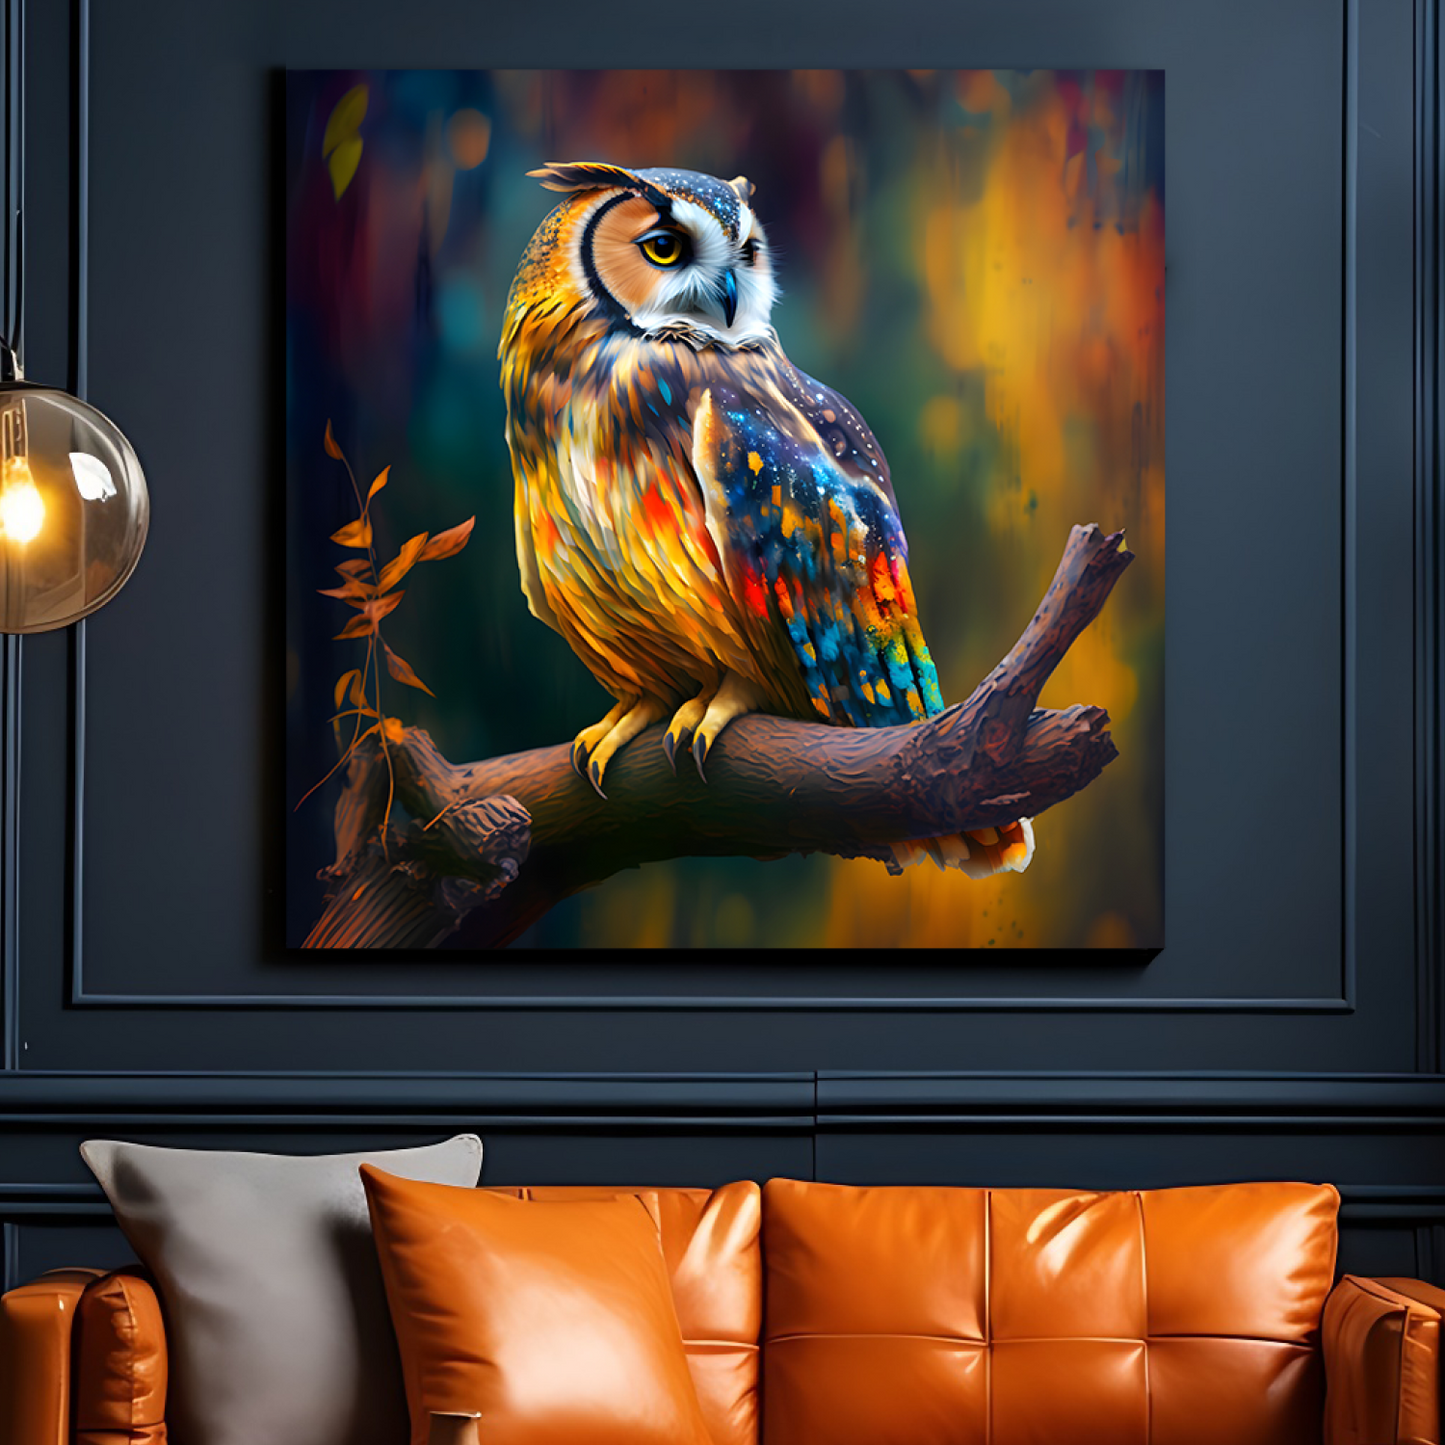 Owl Sitting on Branch Wood Print Wall Art